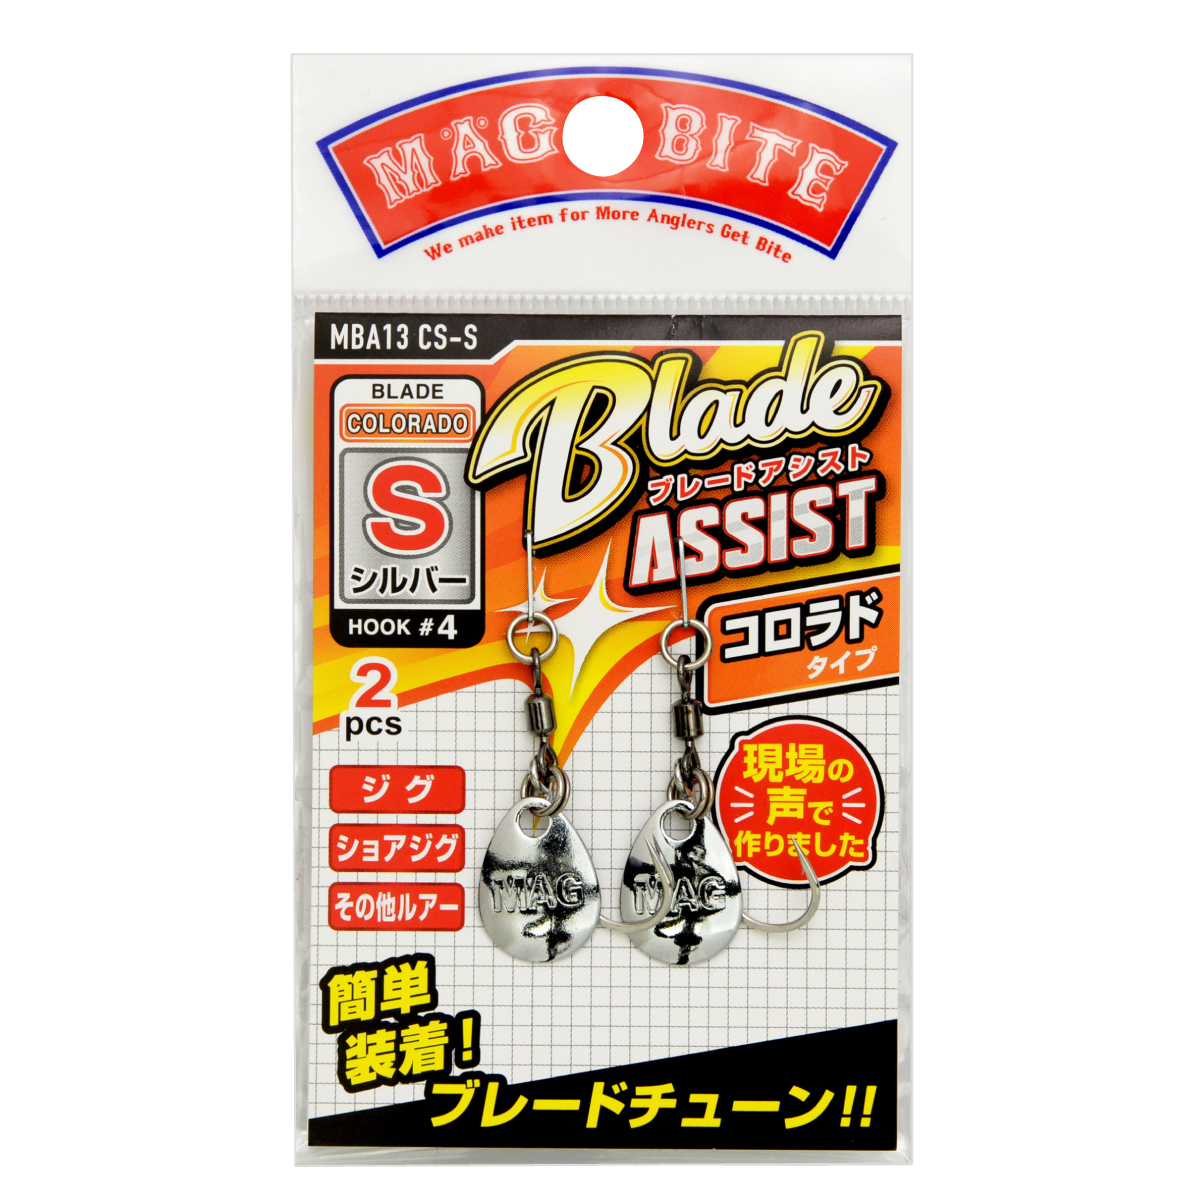 Крючки Magbite MBA13 Blade Assist S colorado silver